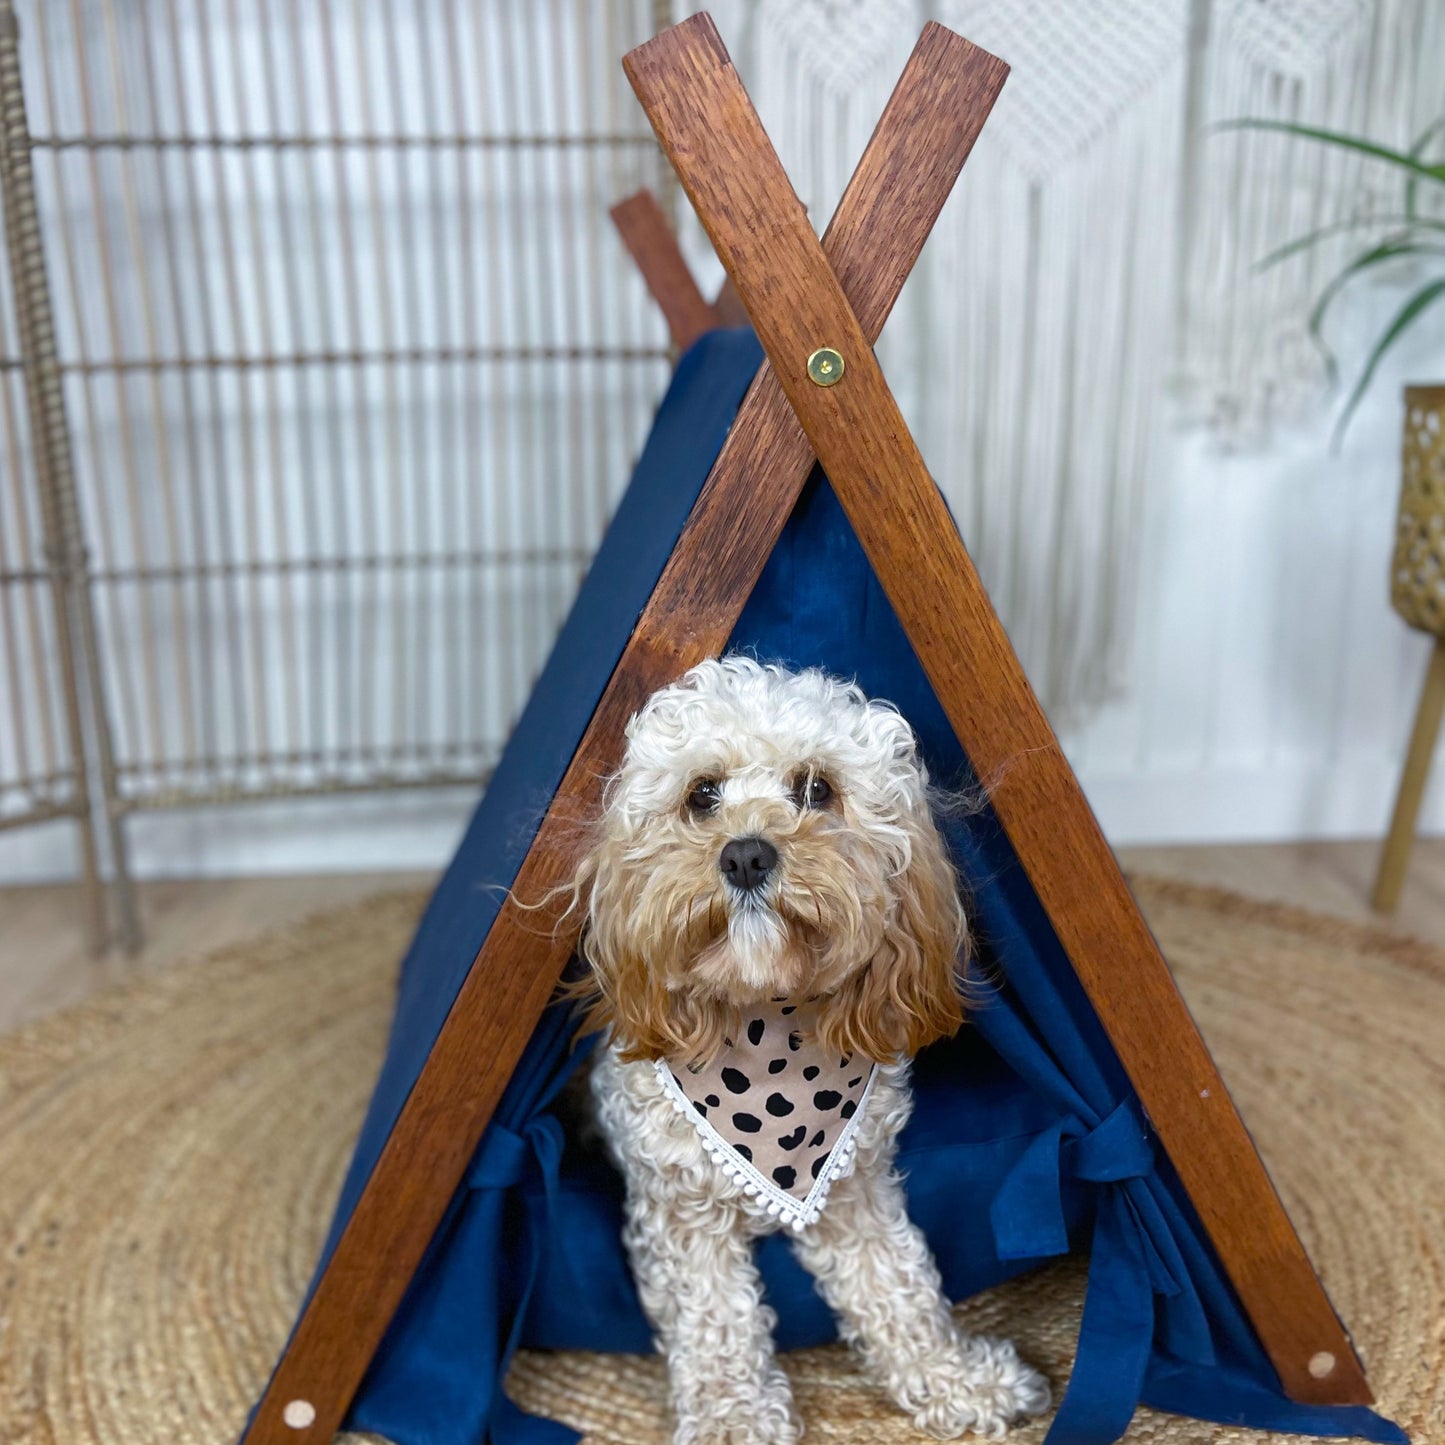 Sylvia Puppy Tent